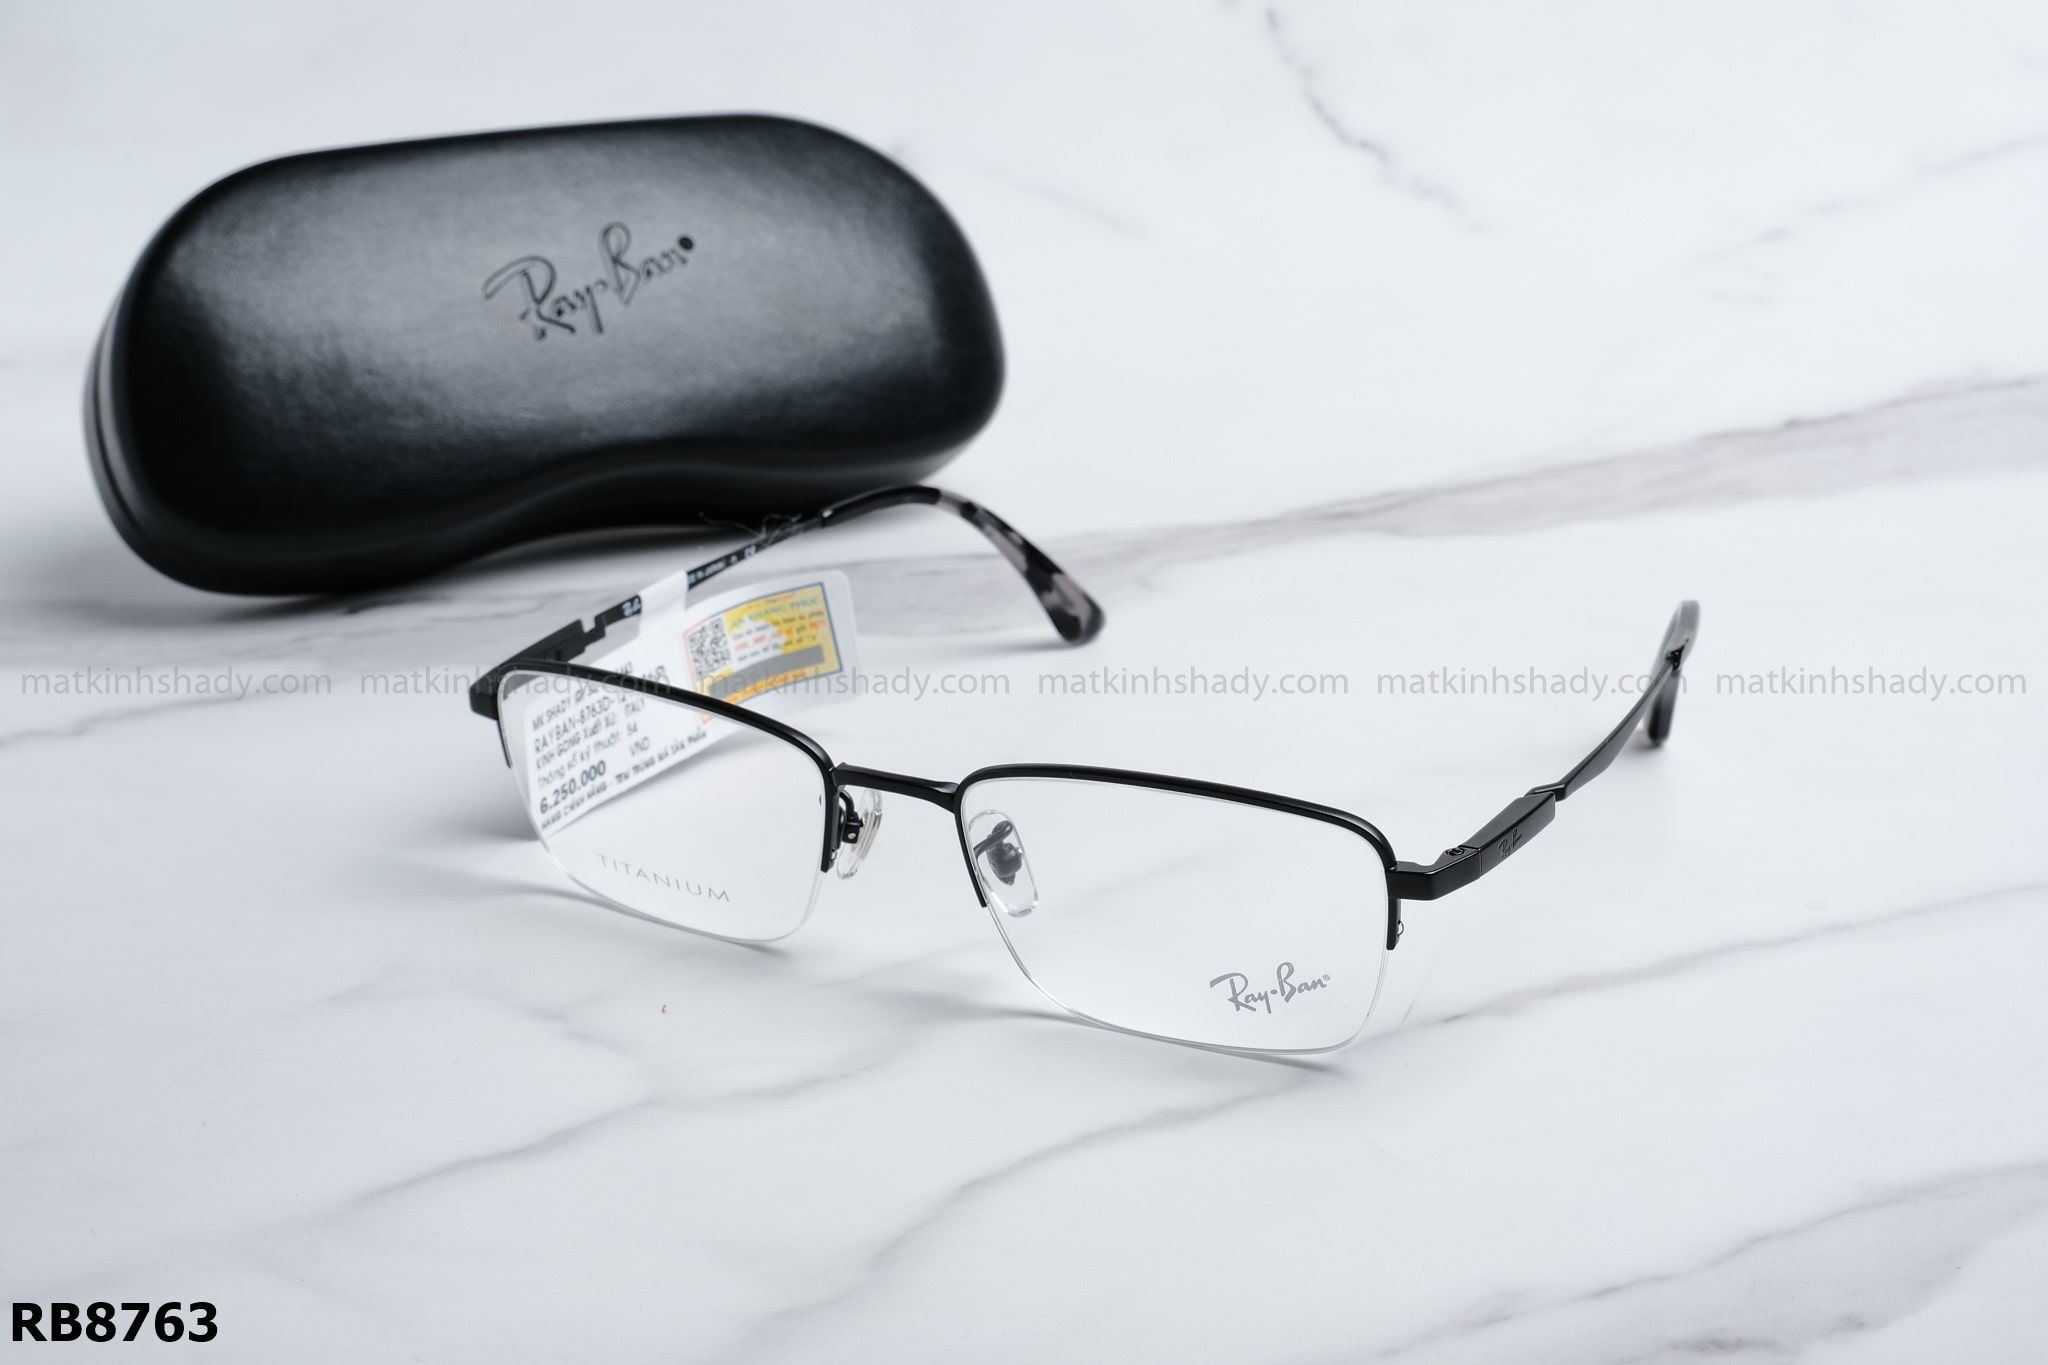  Rayban Eyewear - Glasses - RB8763 